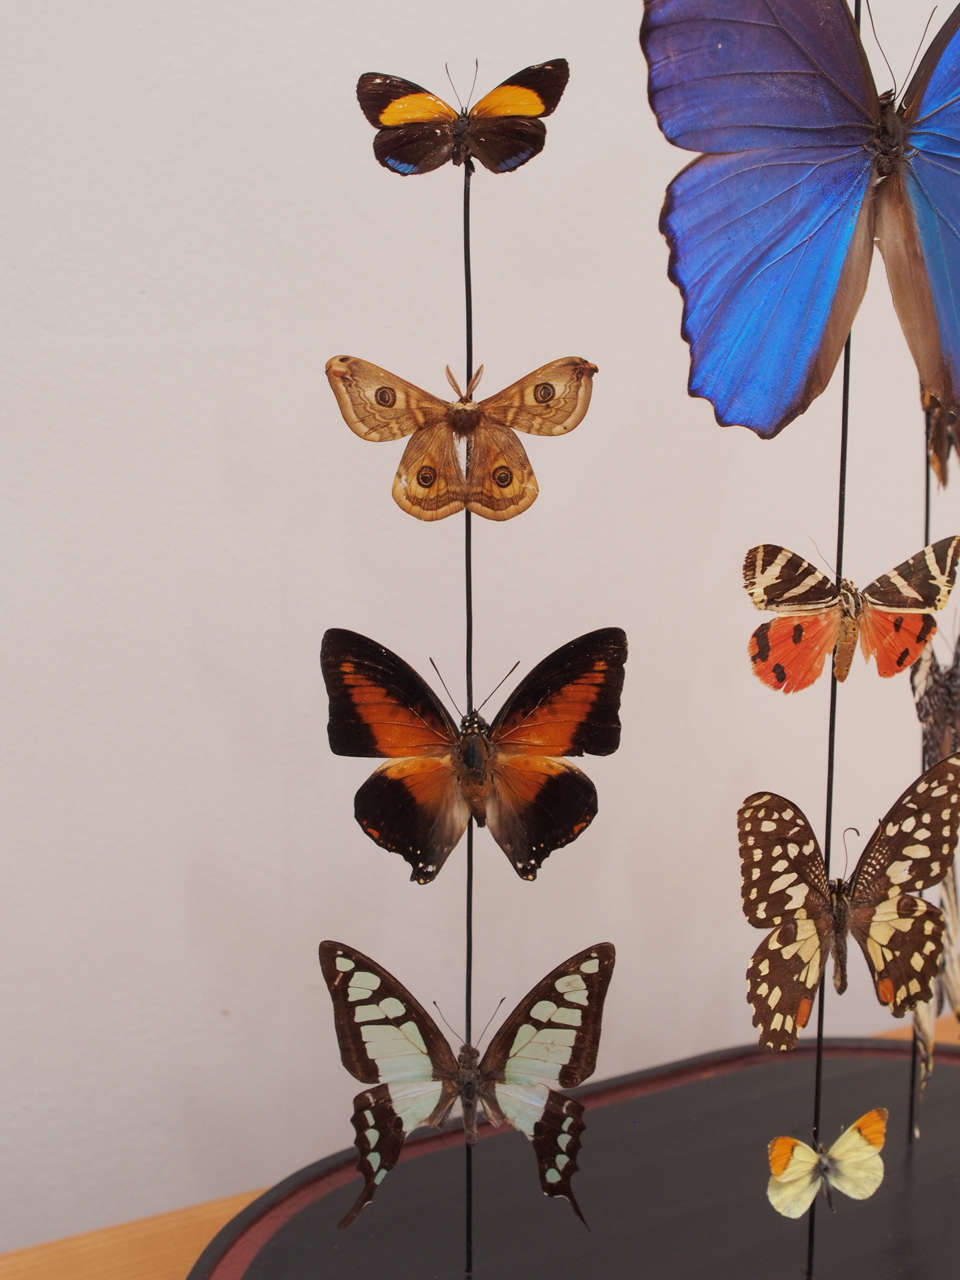 Specimen Butterflies Under Glass Dome 2